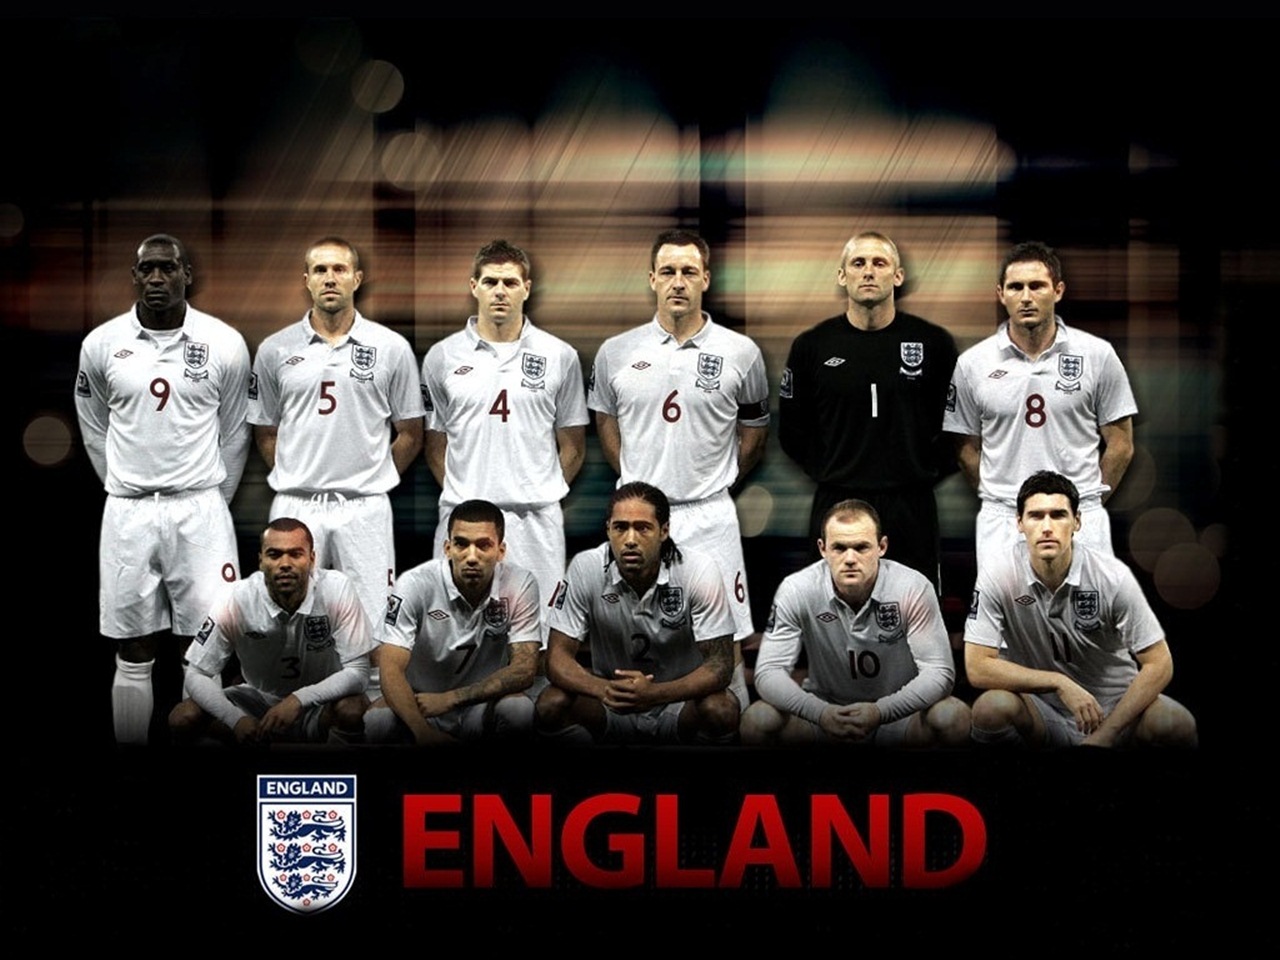 England Football Team Wallpaper On